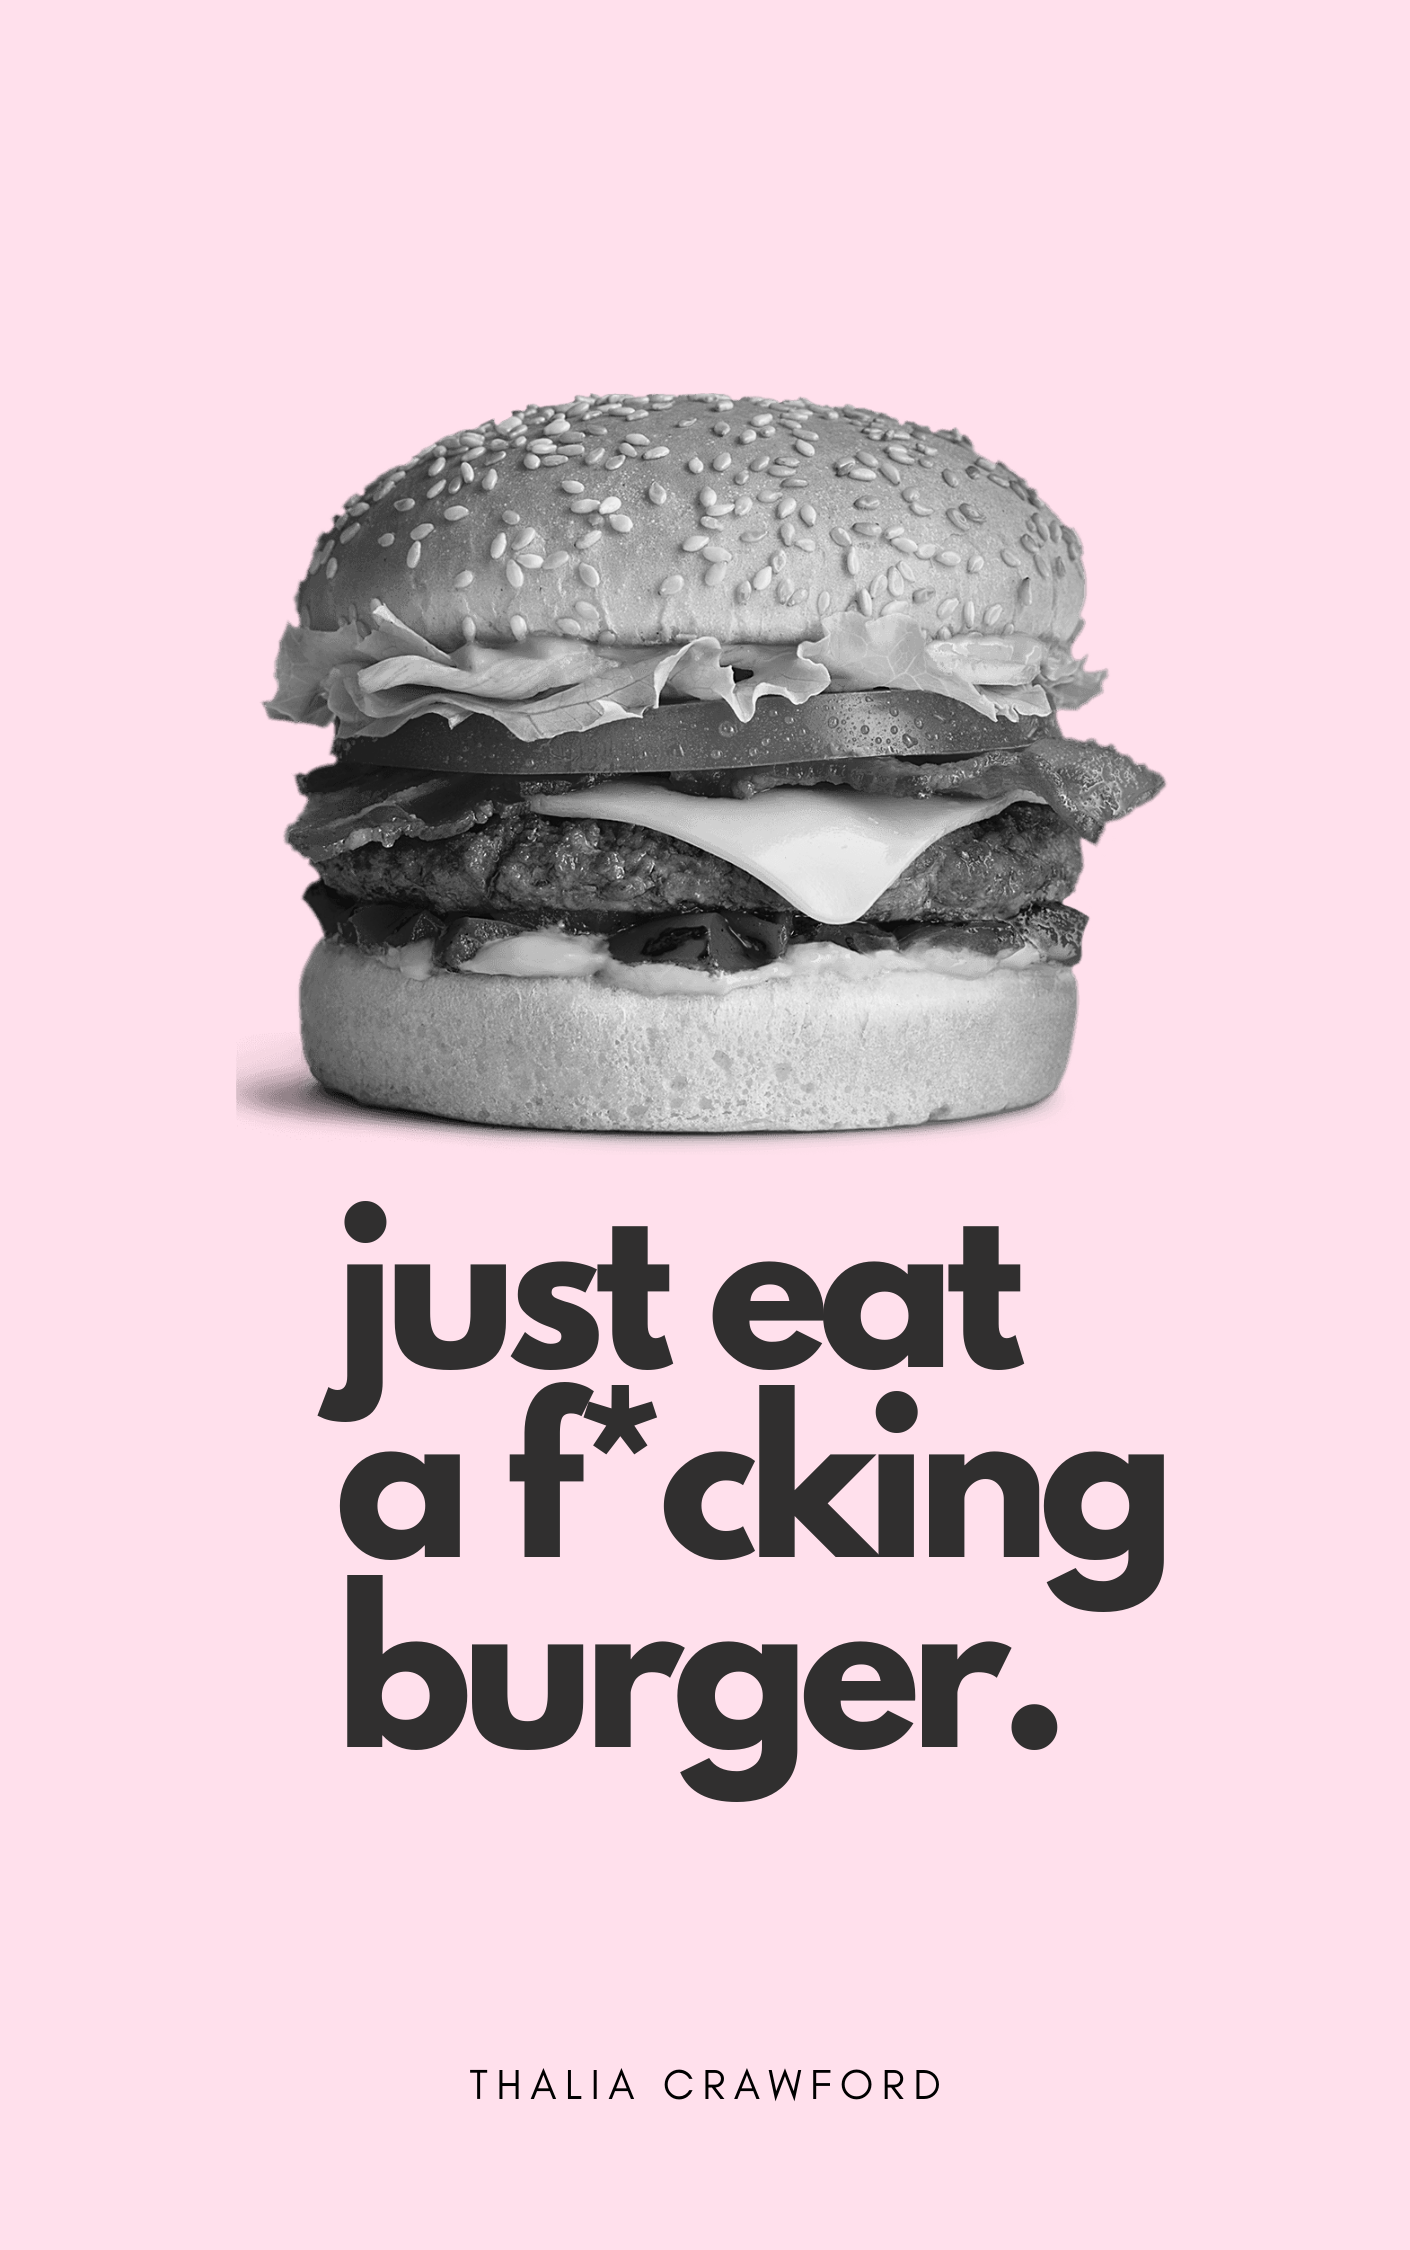 Just Eat A F*cking Burger